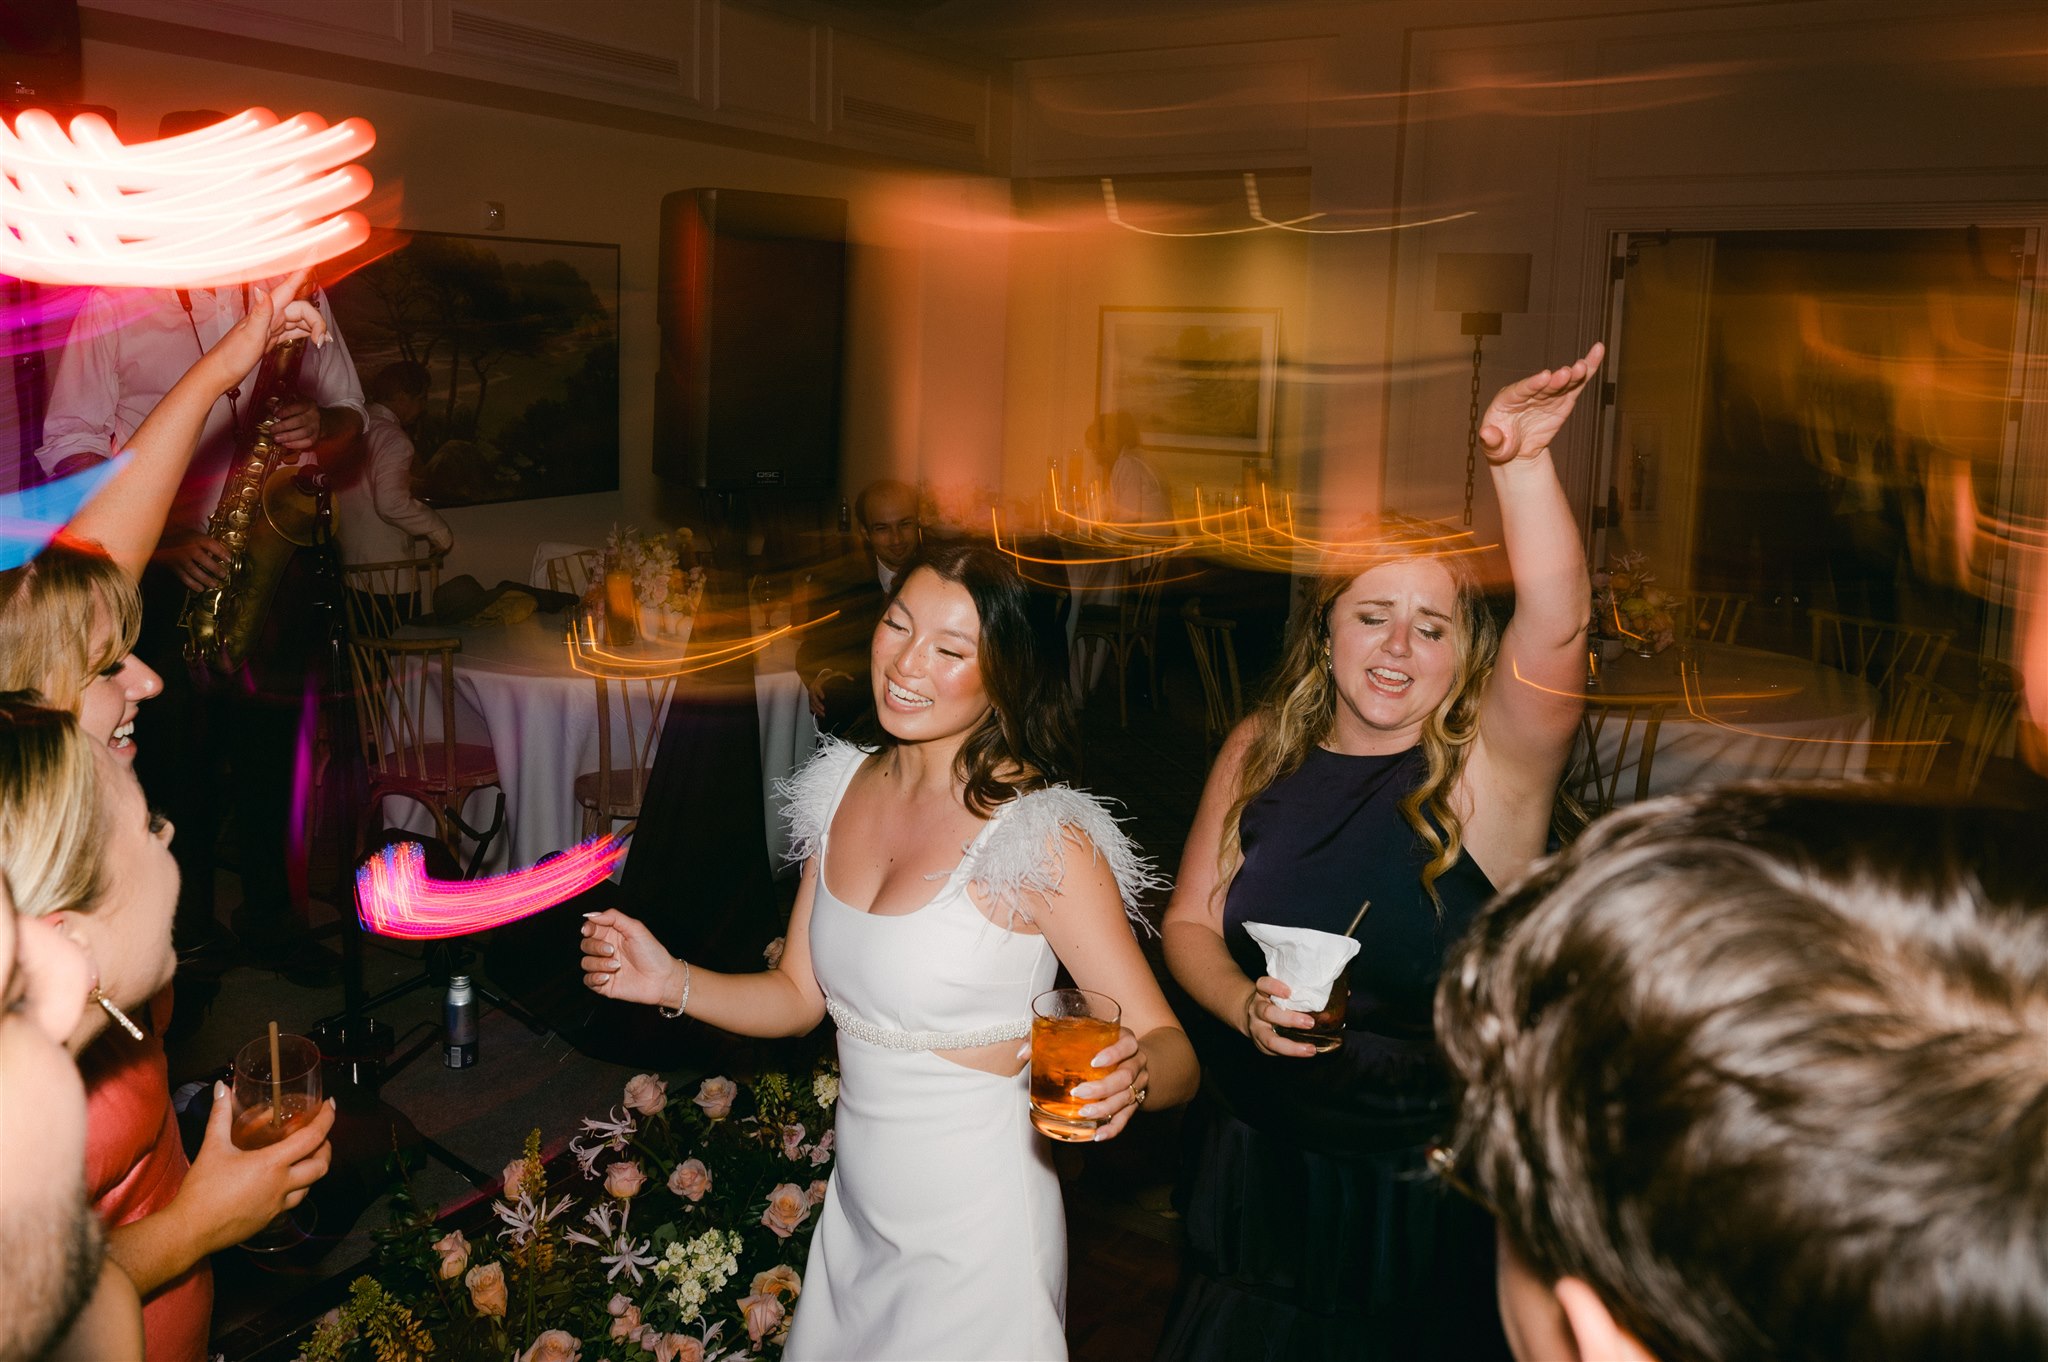 wedding dance party blurred vintage effect after party dress inspiration bride dancing